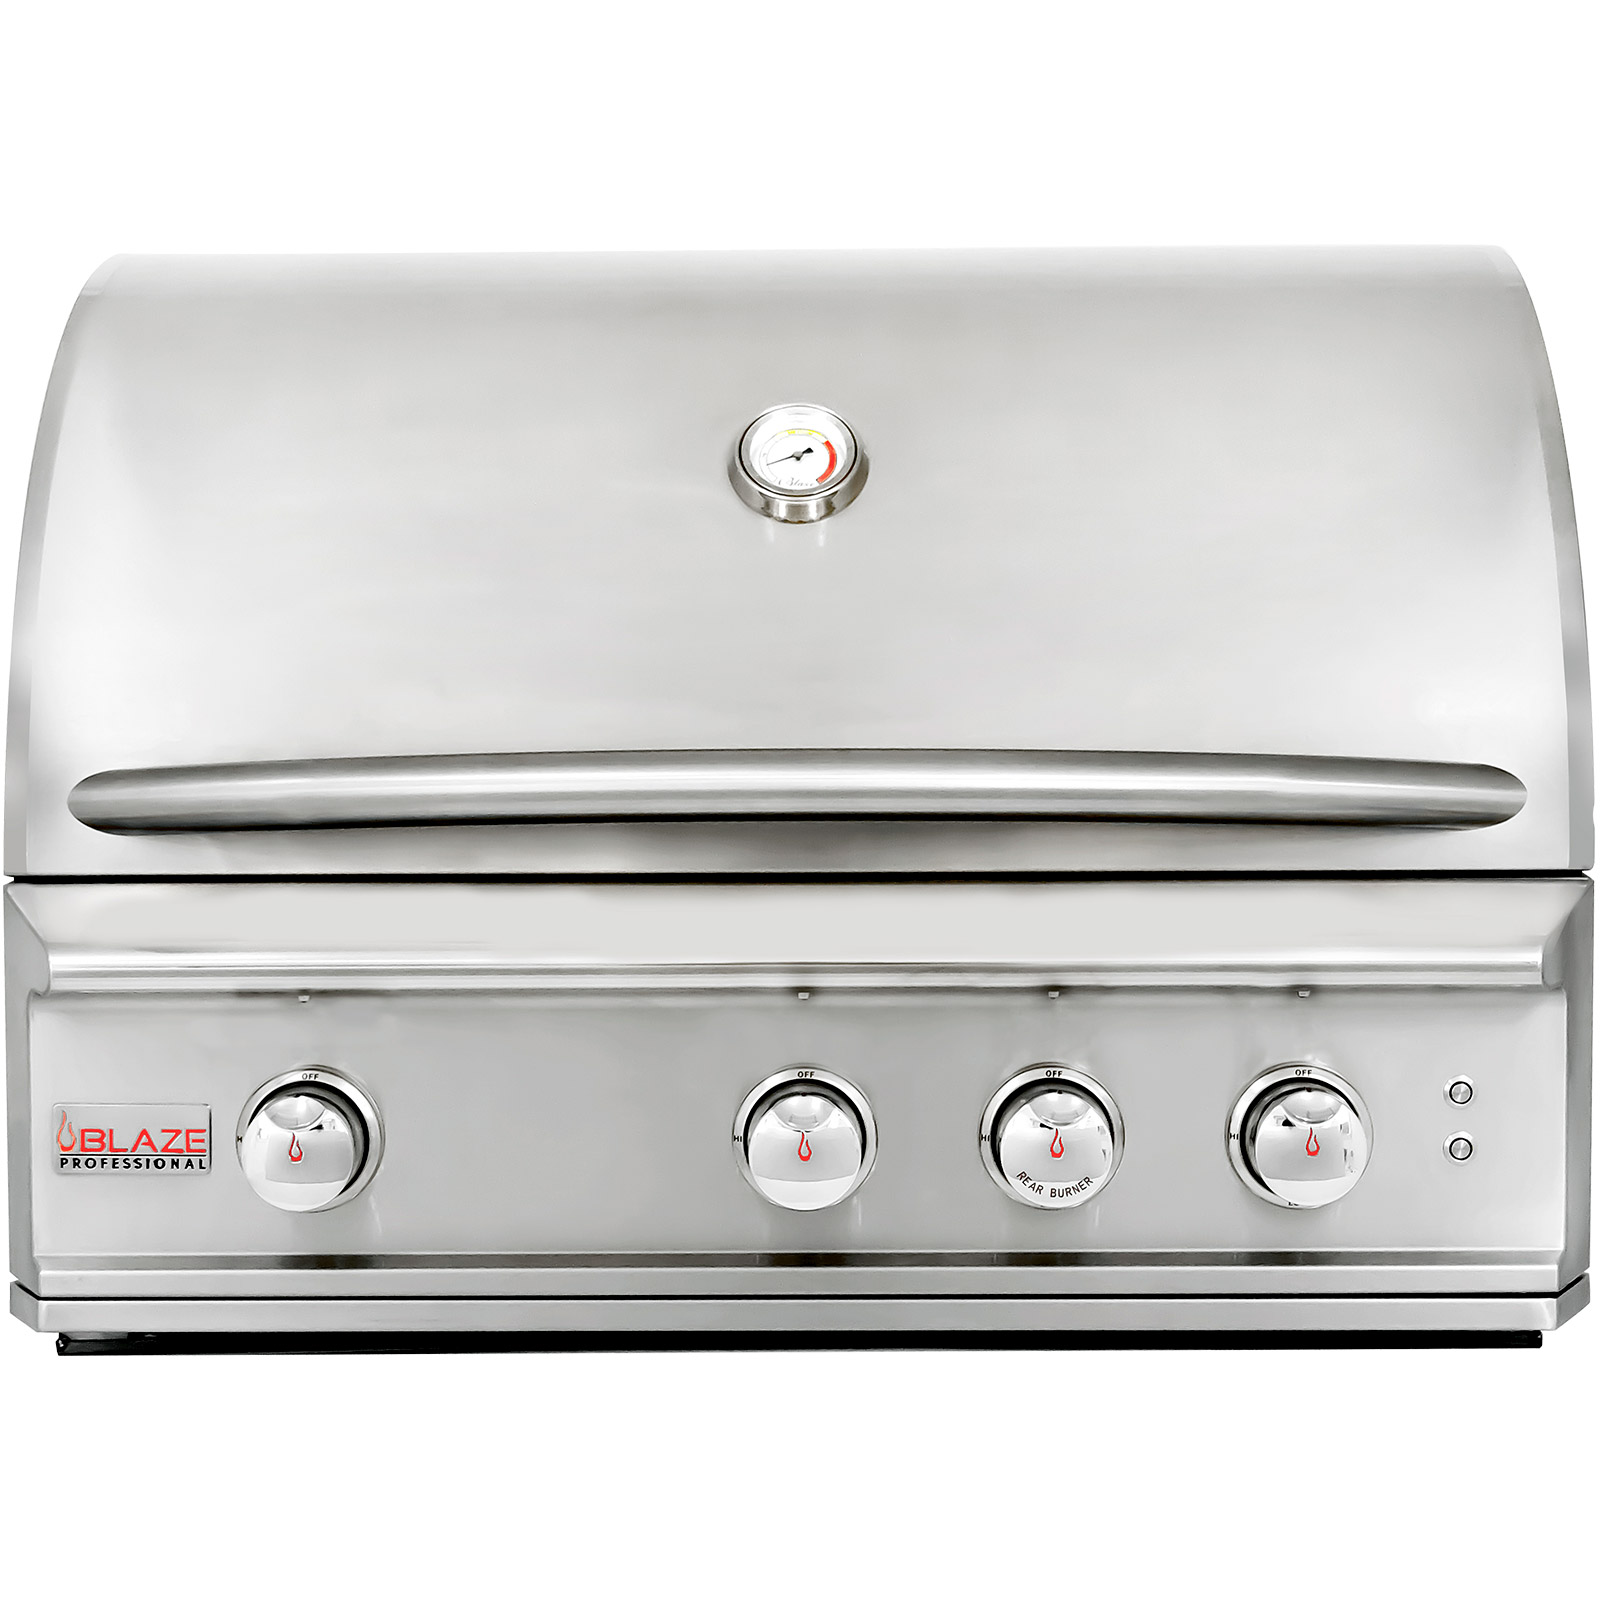 Blaze Grills - 3-Burner Professional Gas Grill - Best of ...